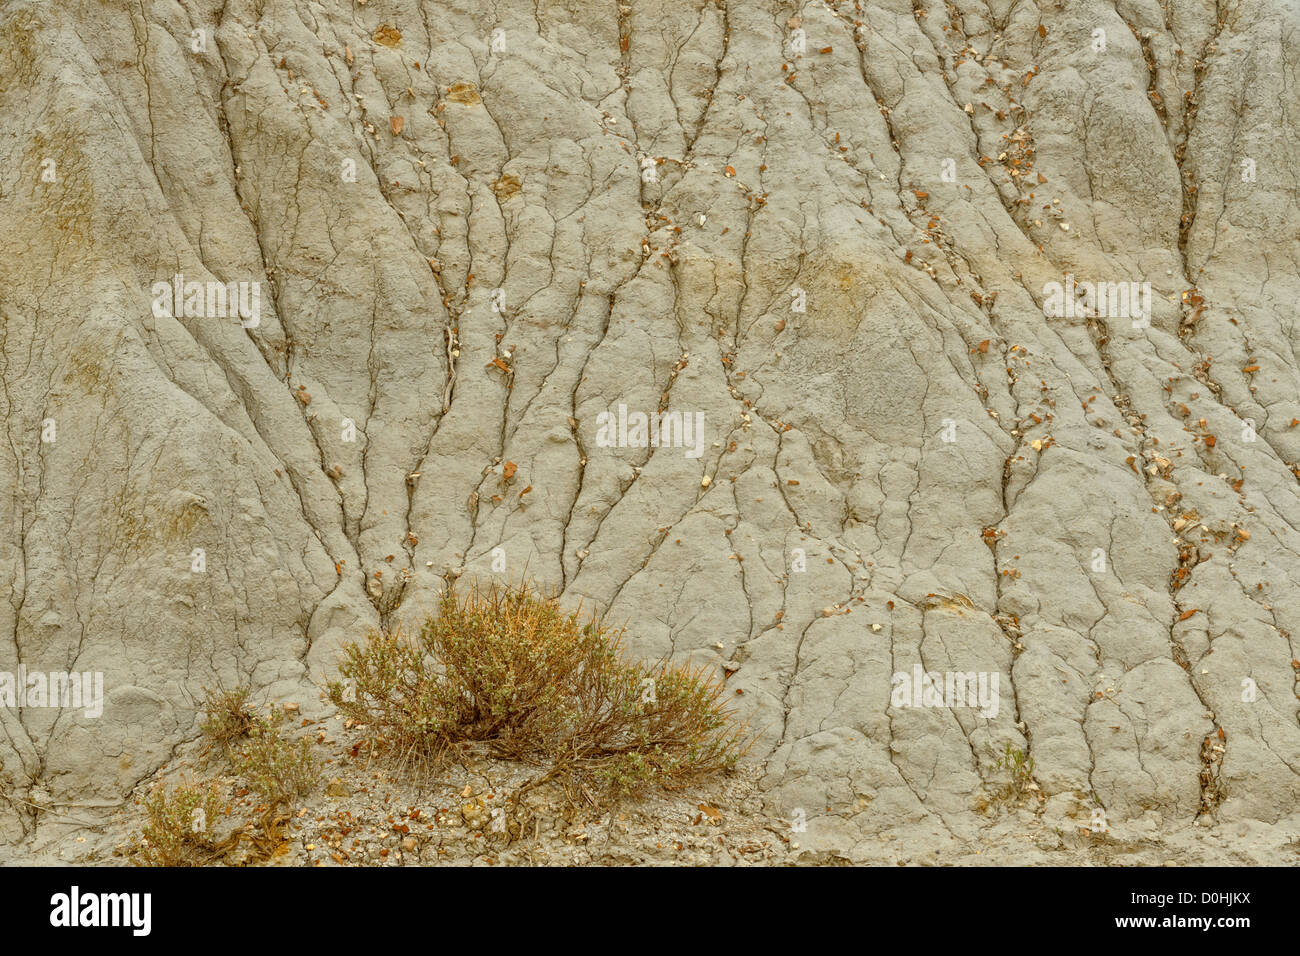 Bentonite bluffs with eroding mudstone layers, Theodore Roosevelt NP (South Unit), North Dakota, USA Stock Photo